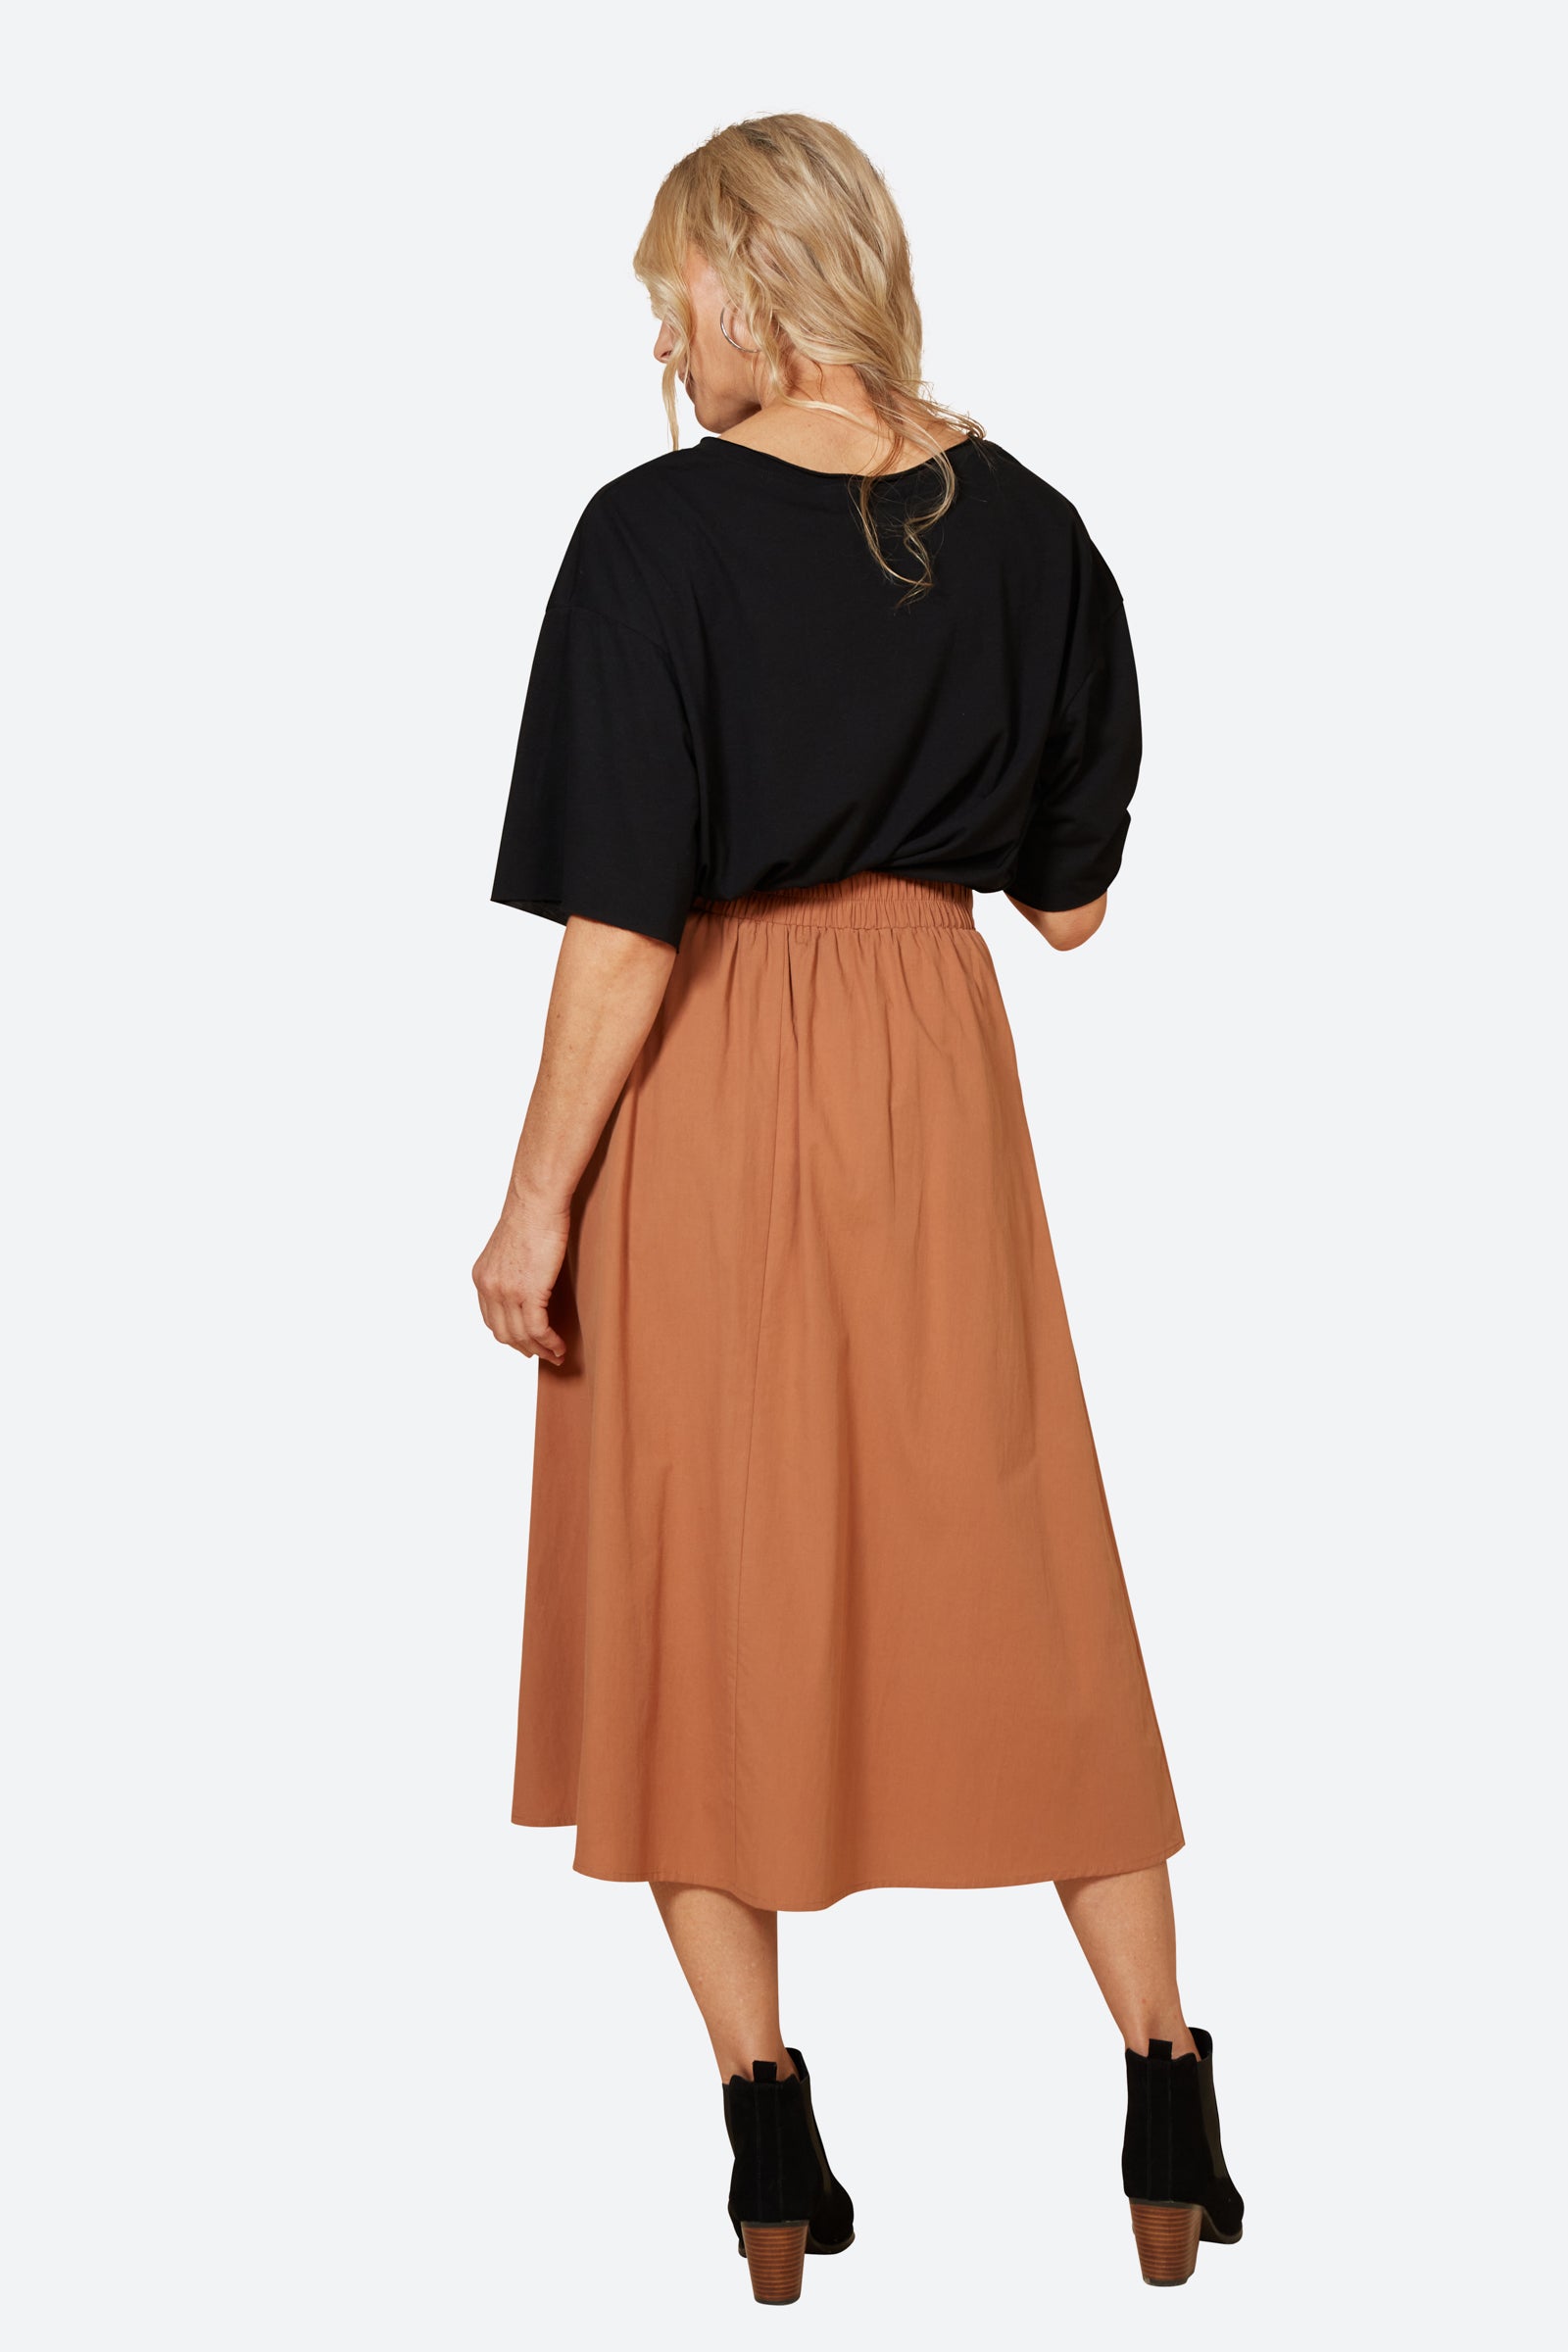 Studio Pleat Skirt - Cinnamon - eb&ive Clothing - Skirt Maxi